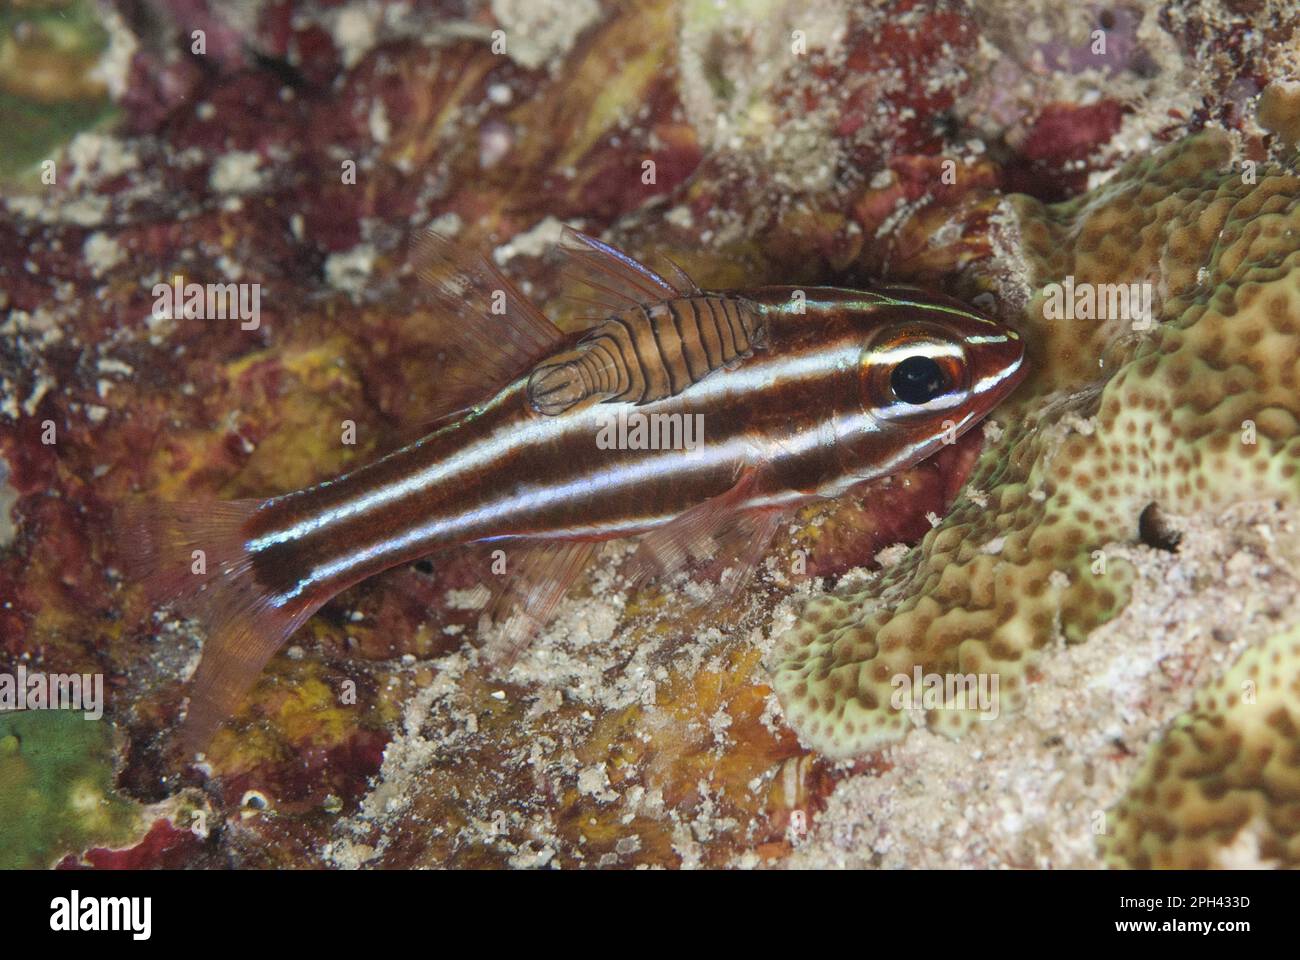 Cardinalfish, blackstripe cardinalfish (Apogon nigrofasciatus), Other animals, Fish, Perch-like, Animals, Blackstripe Cardinalfish adult, with Stock Photo